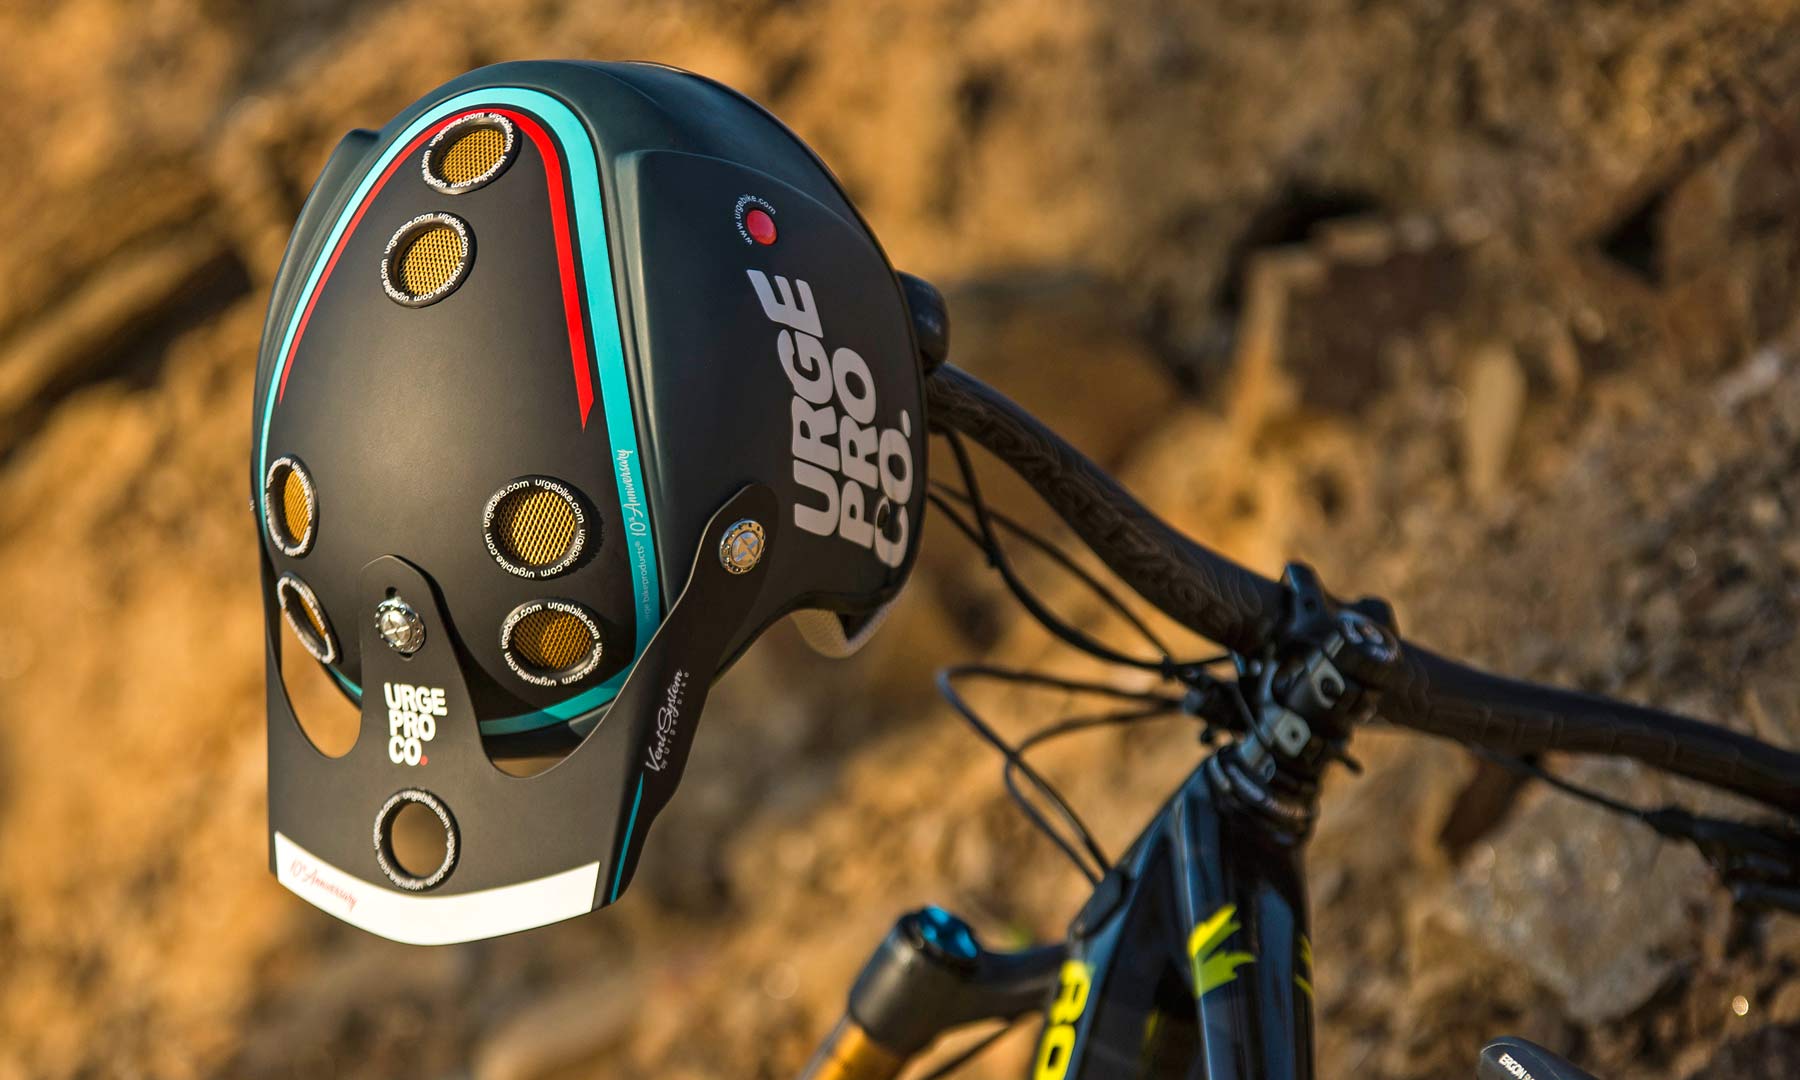 10th anniversary limited edition Urge Endur-O-Matic & Real Jet mountain bike helmets